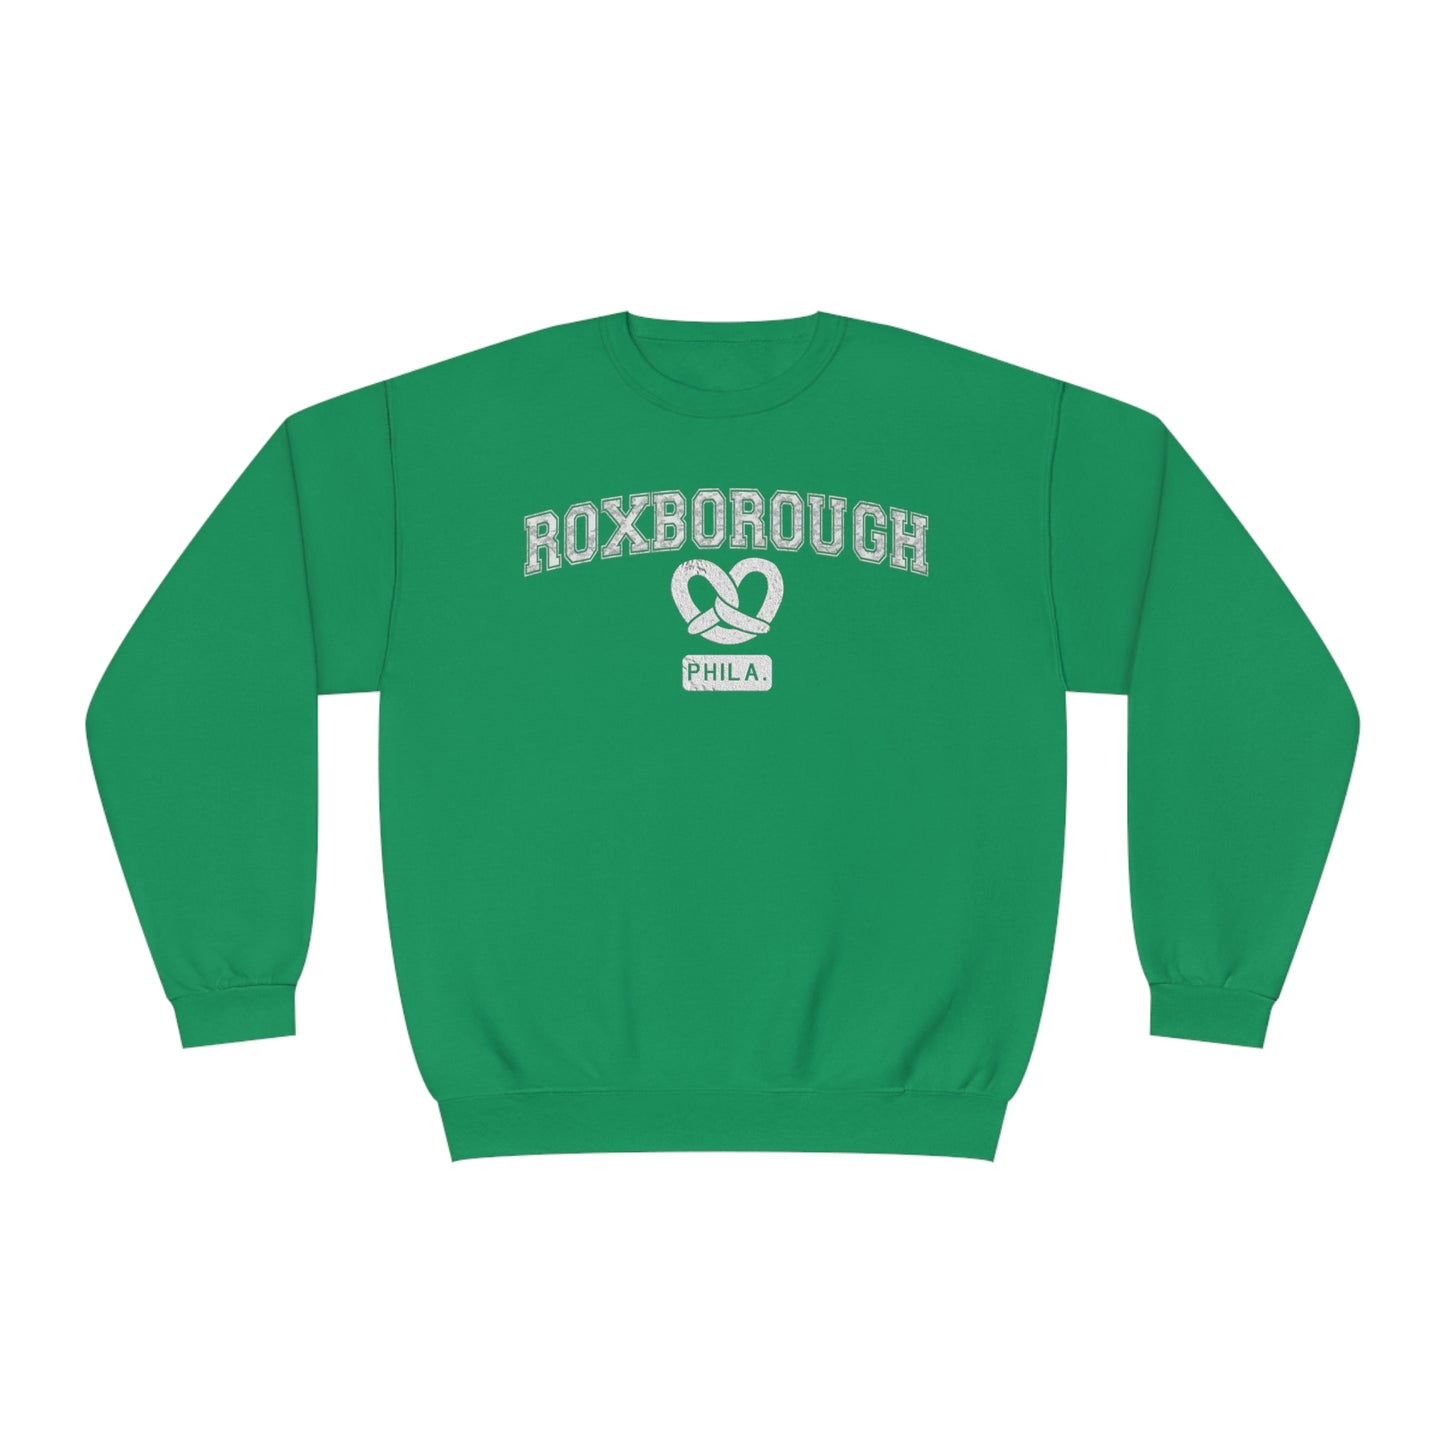 Roxborough // Phila. Crewneck Sweatshirt